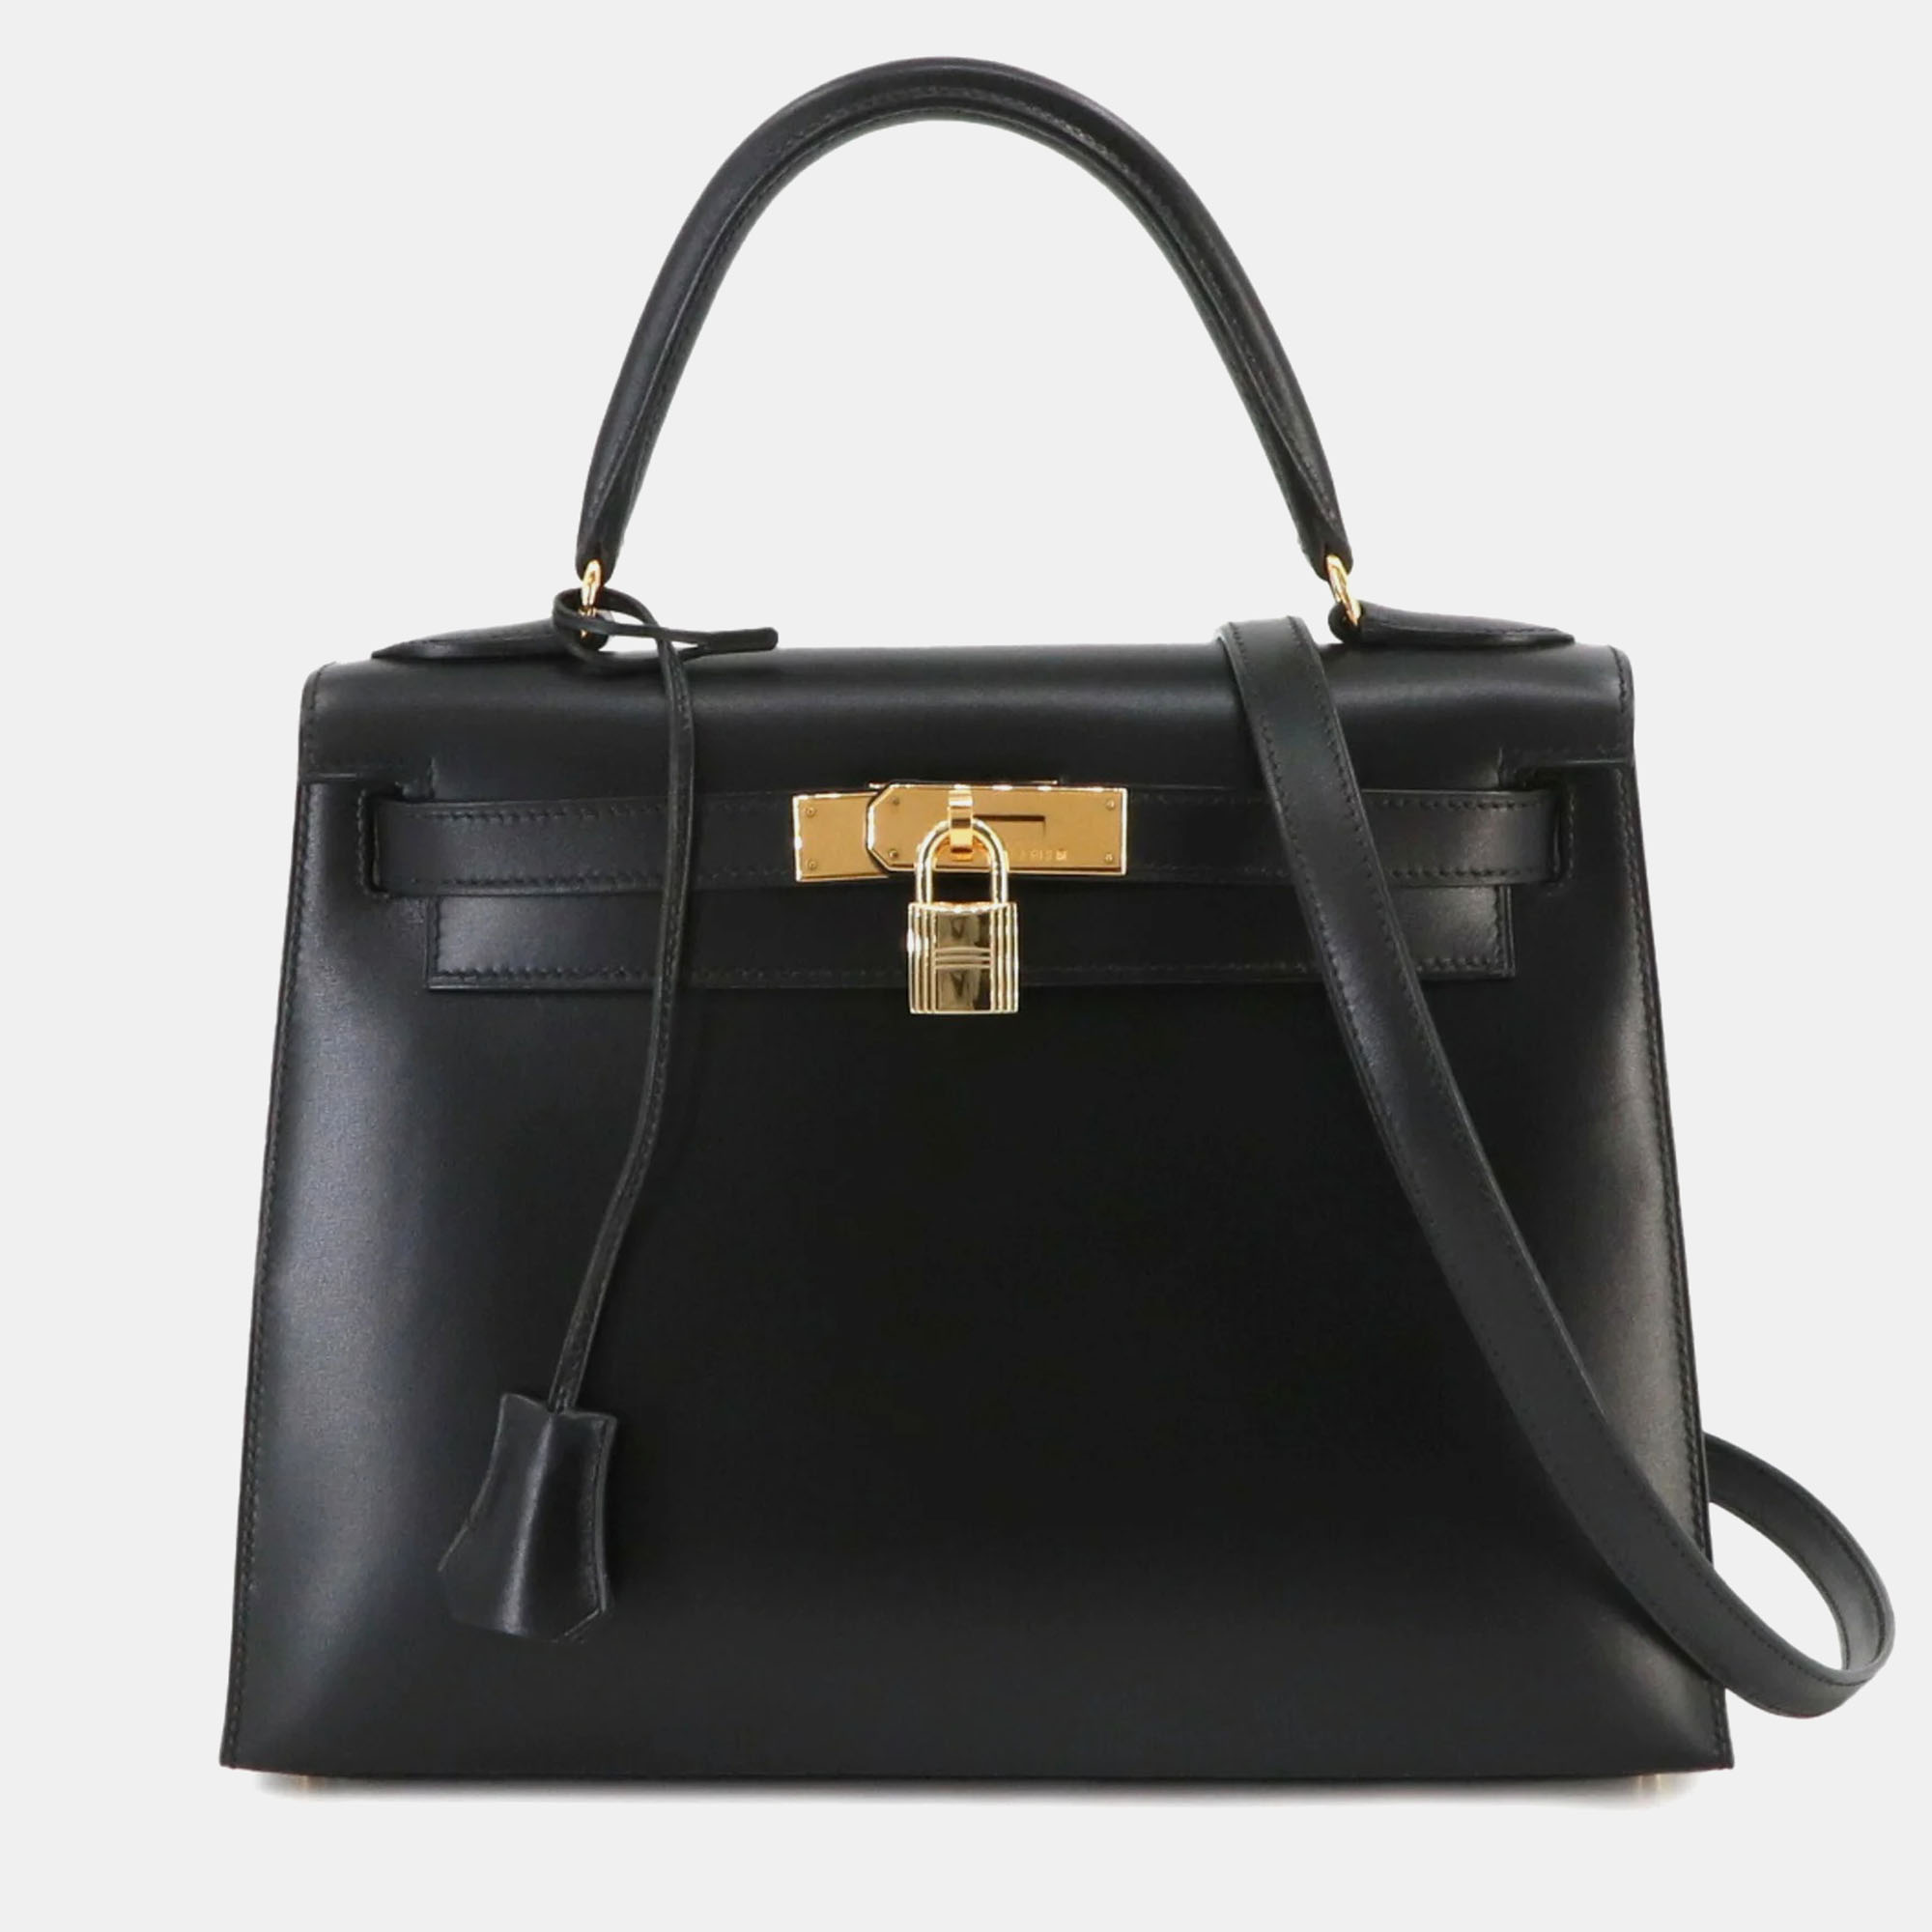 Hermes black box calf leather kelly 28 handbag